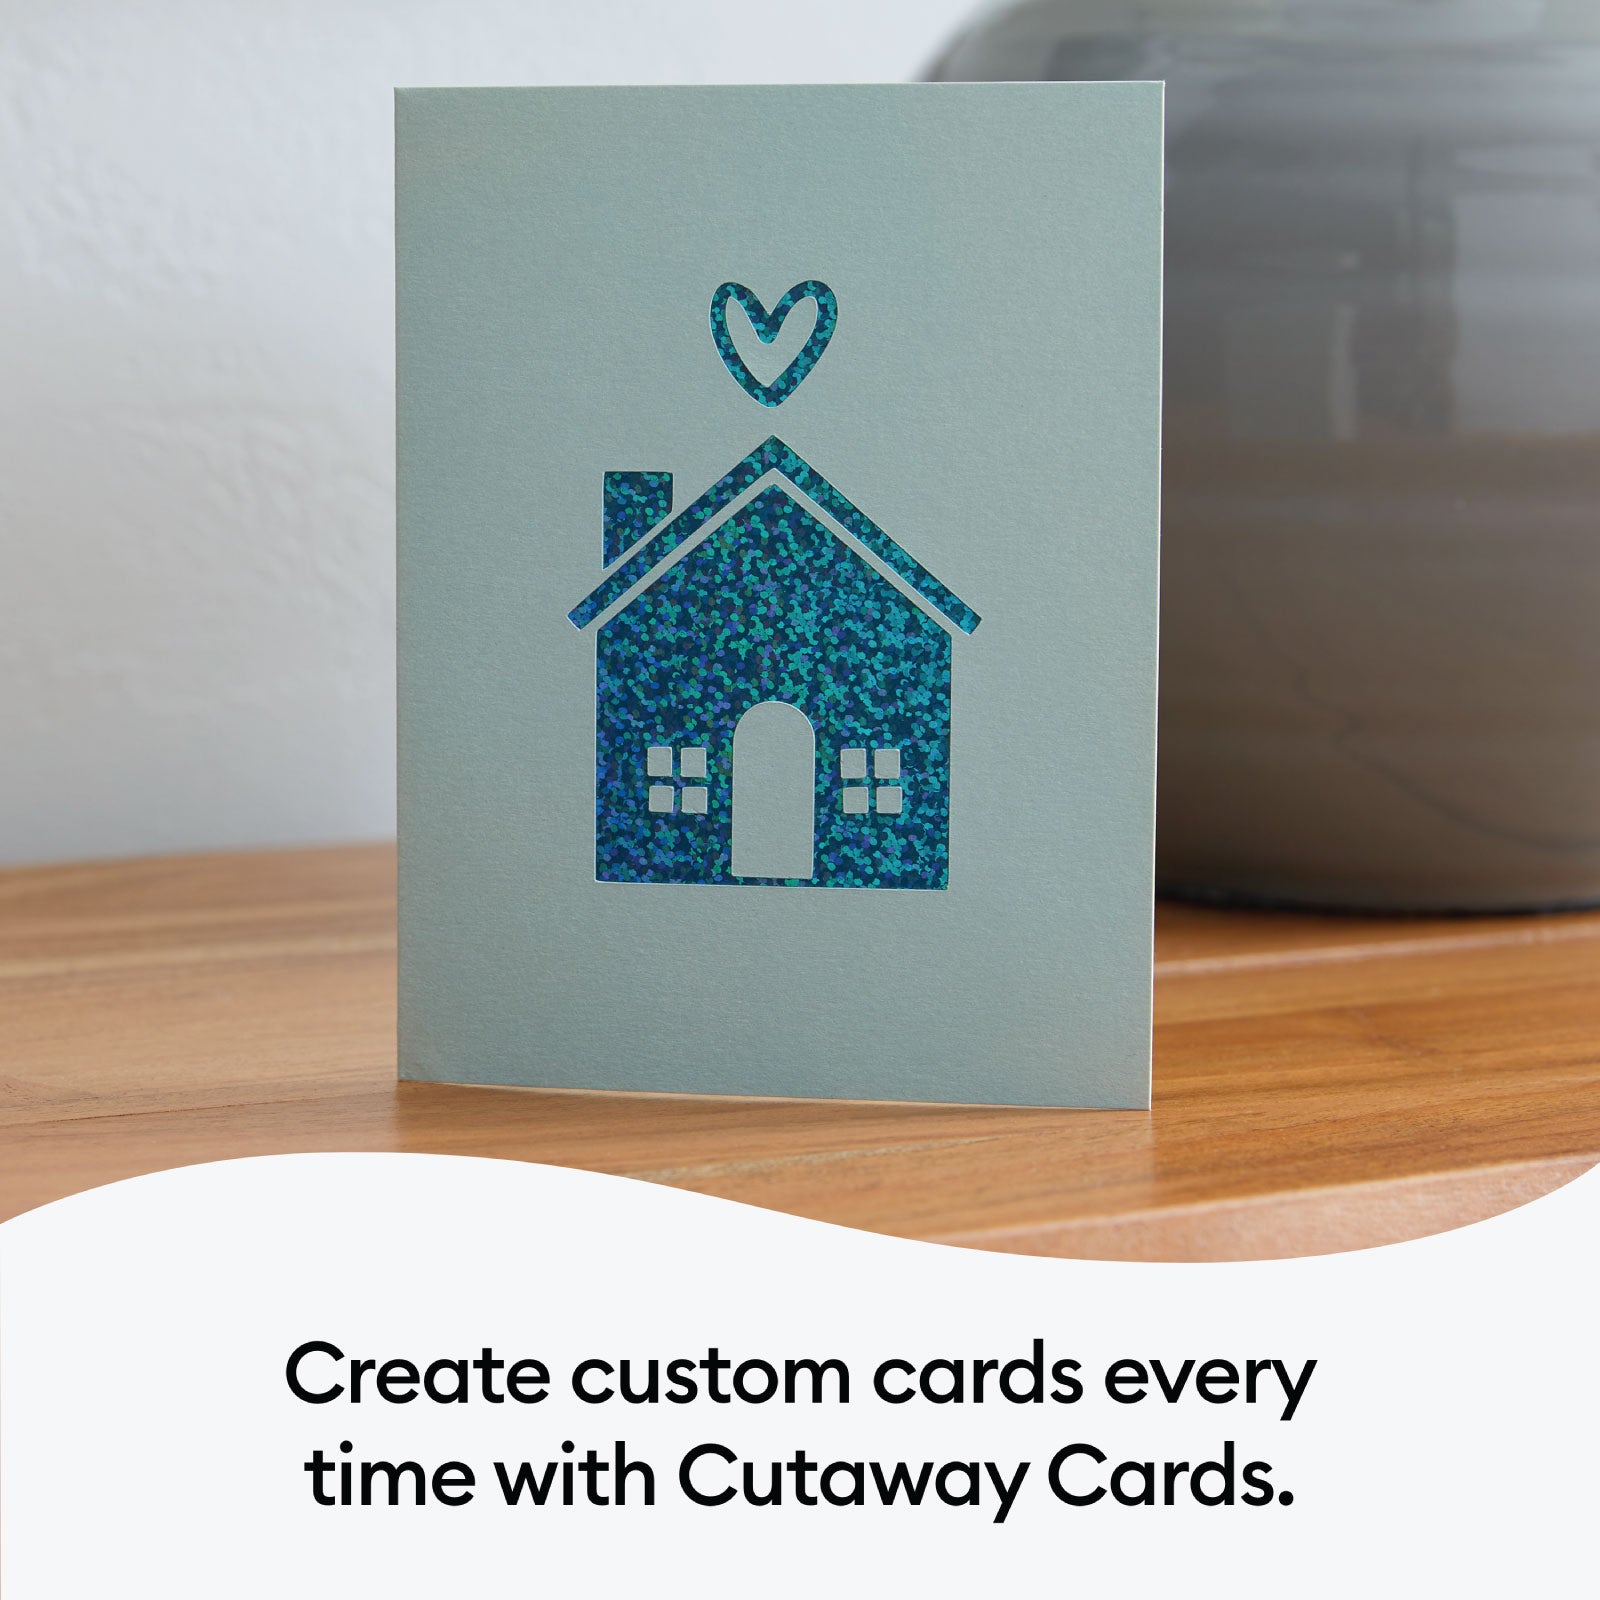 Cricut Joy Cutaway Cards, Corsage Sampler - Damaged Package